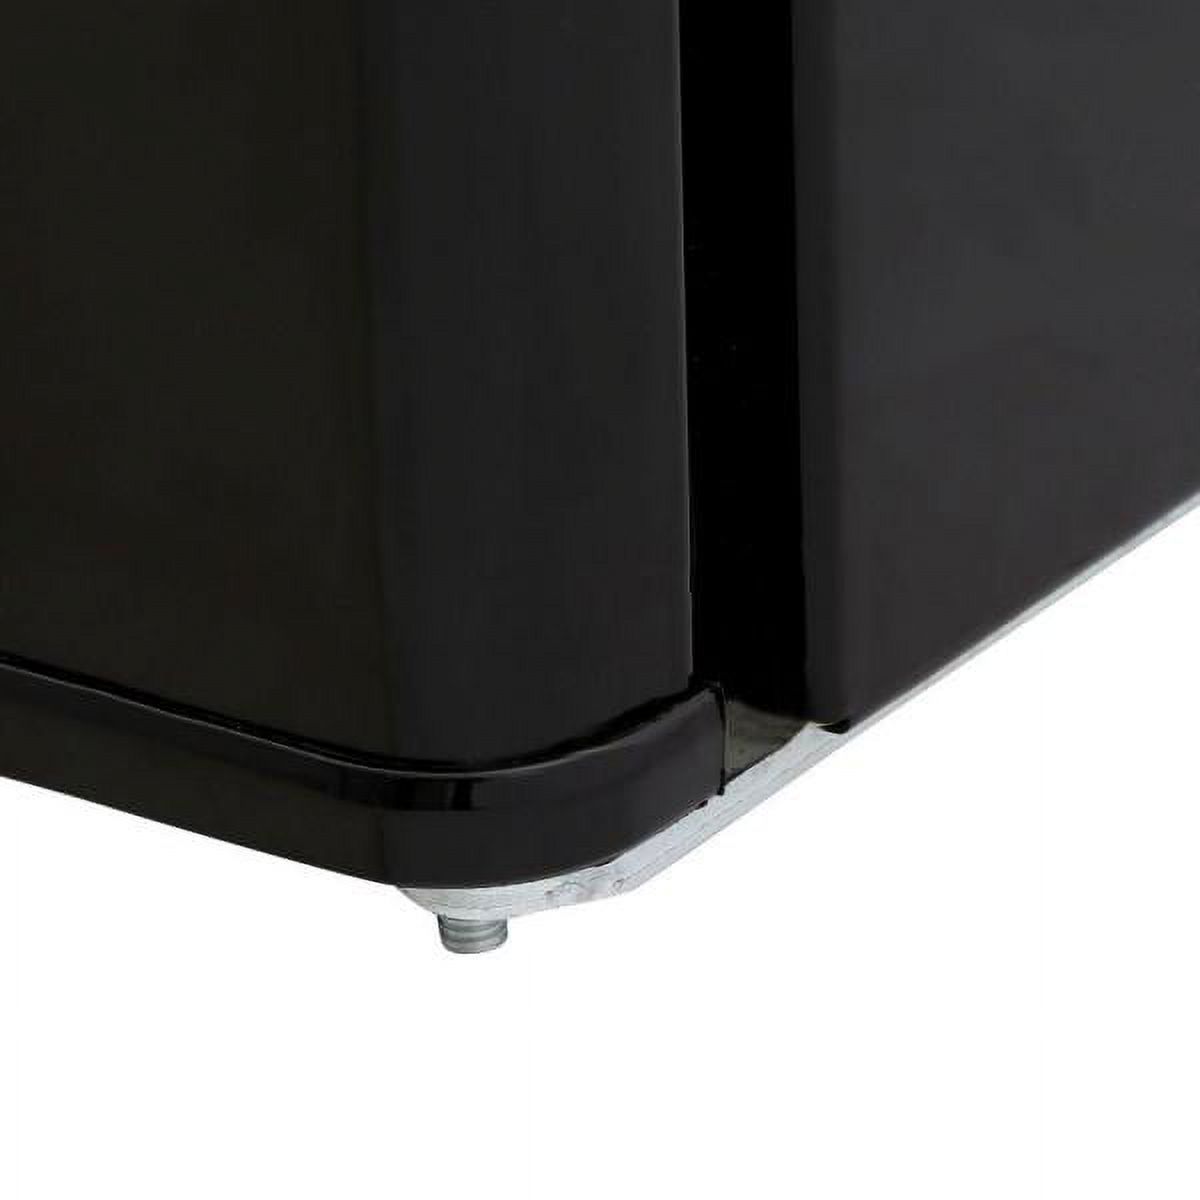 IGLOO 3.2 cu. ft. Mini Refrigerator in Black-FR320-BLACK - image 3 of 7